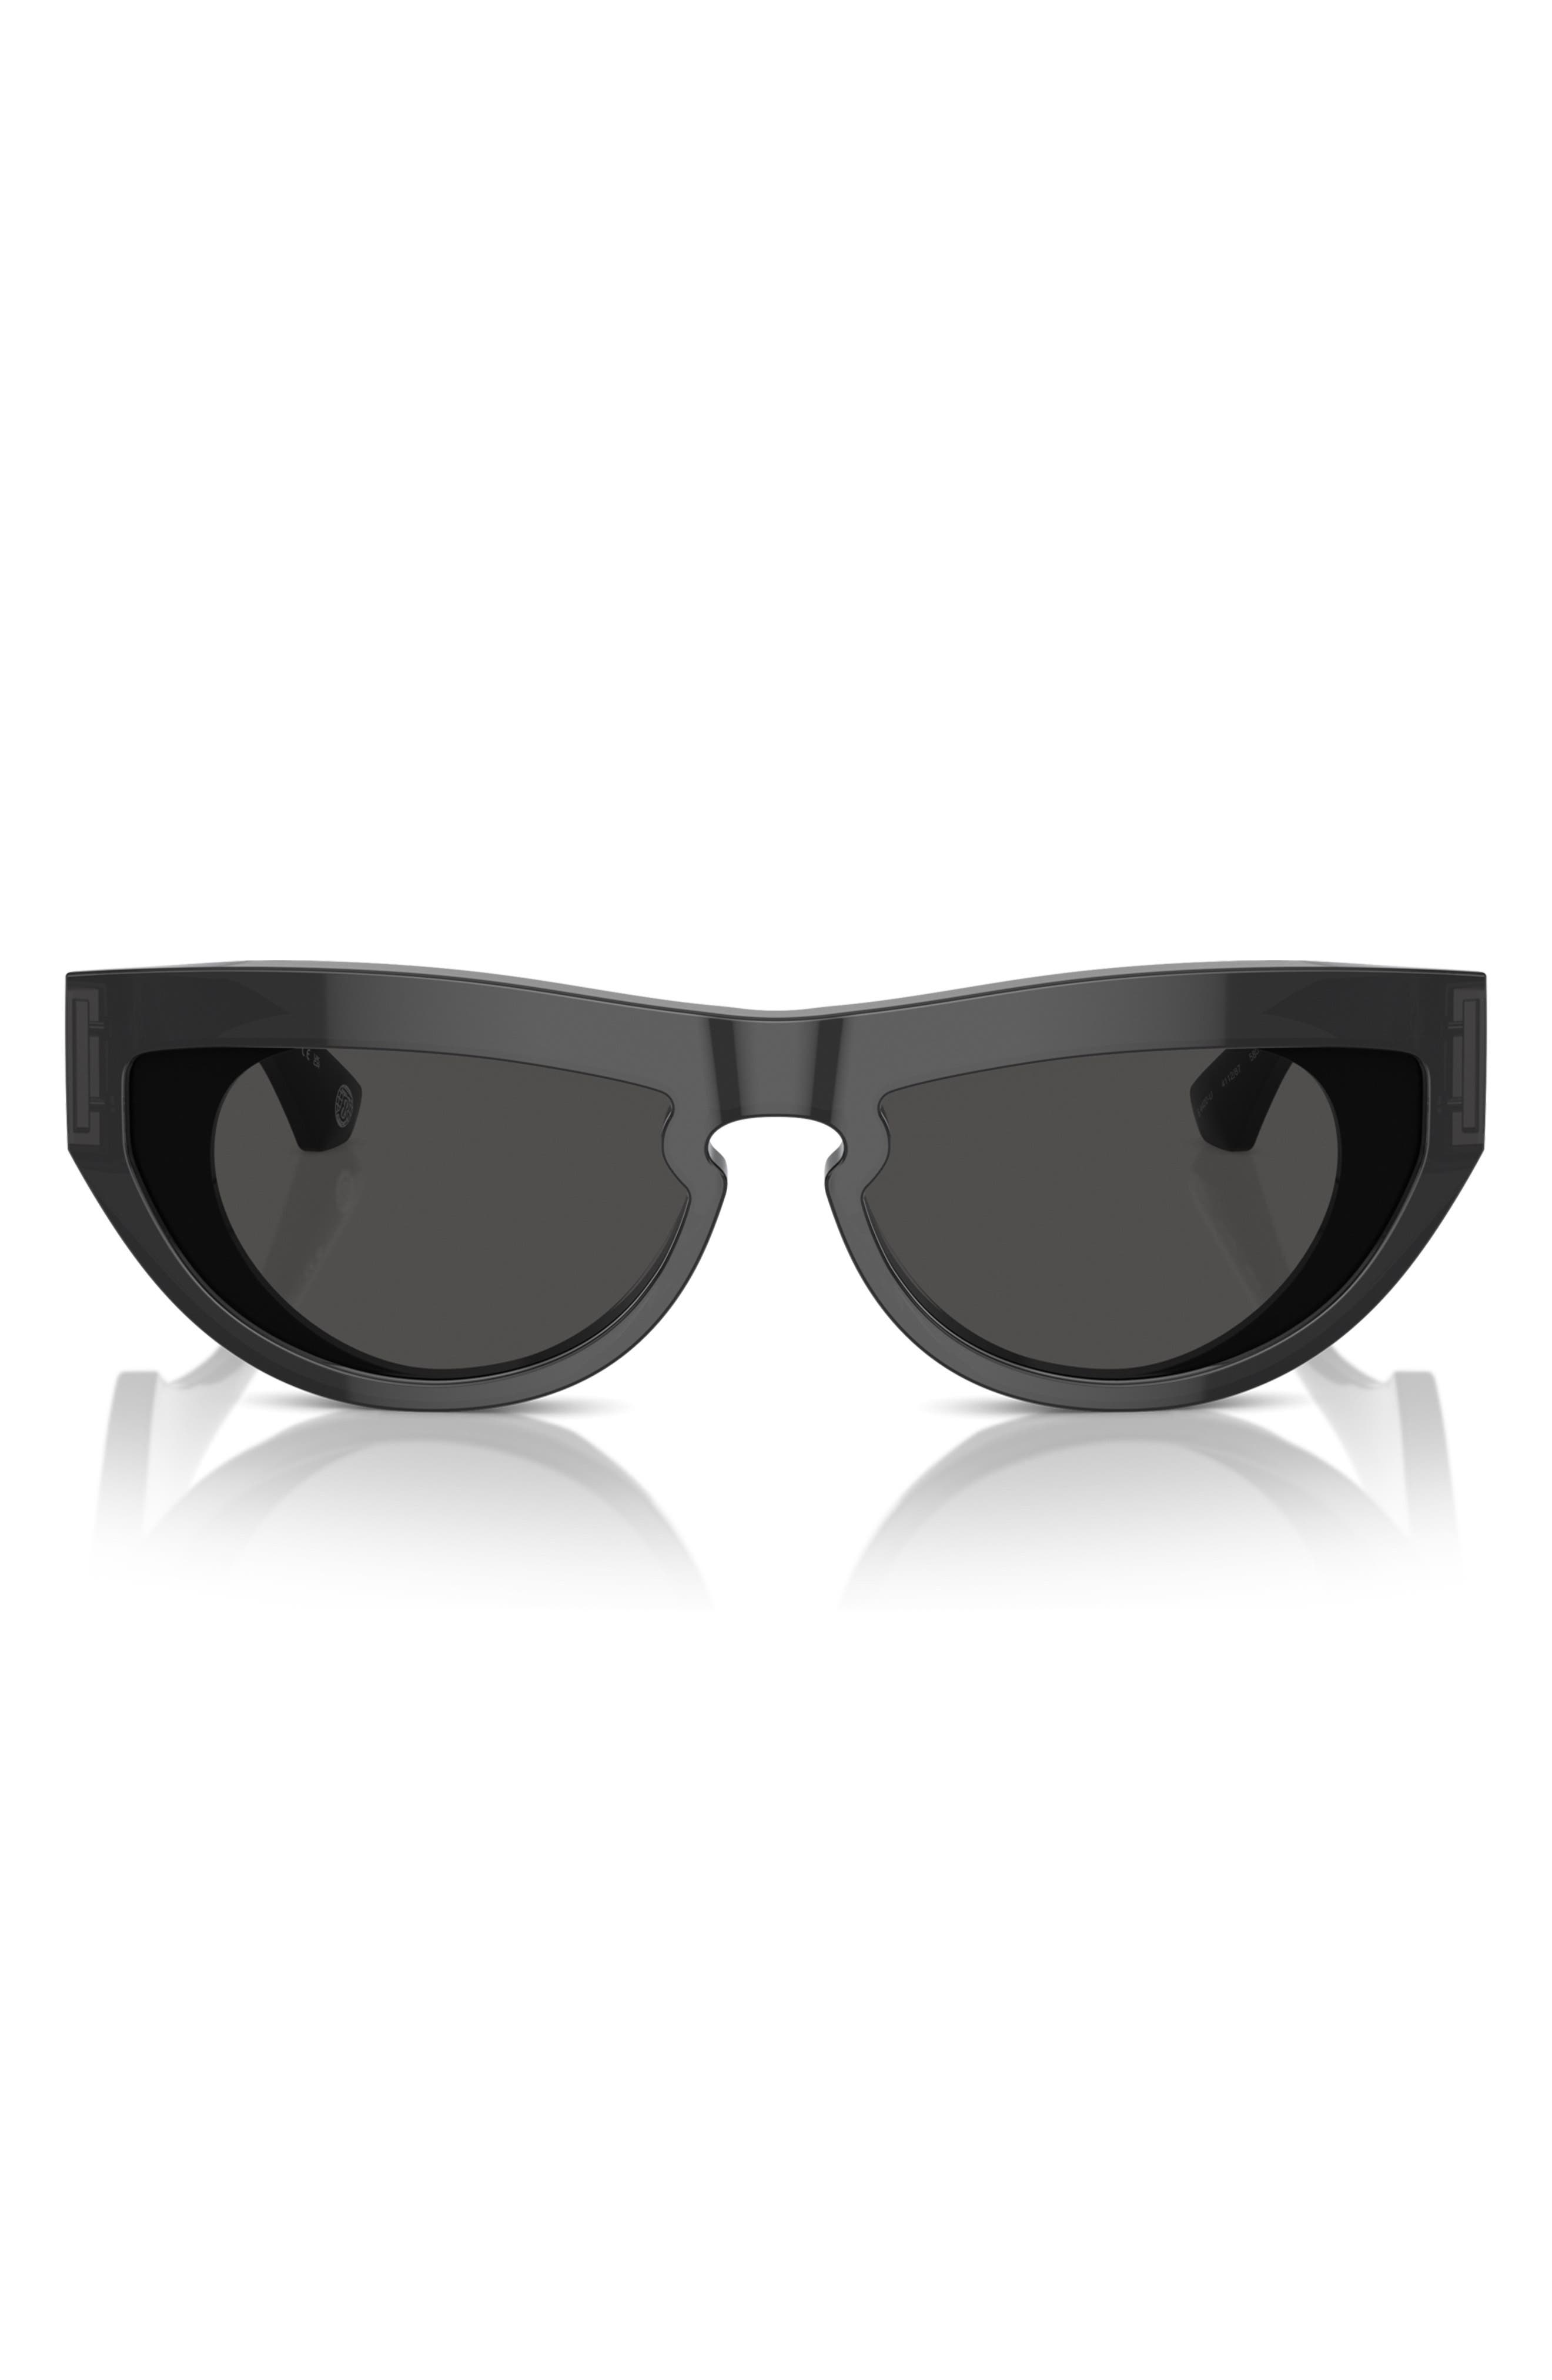 Burberry Kitty Sunglasses Orange/Black/White (40826281)